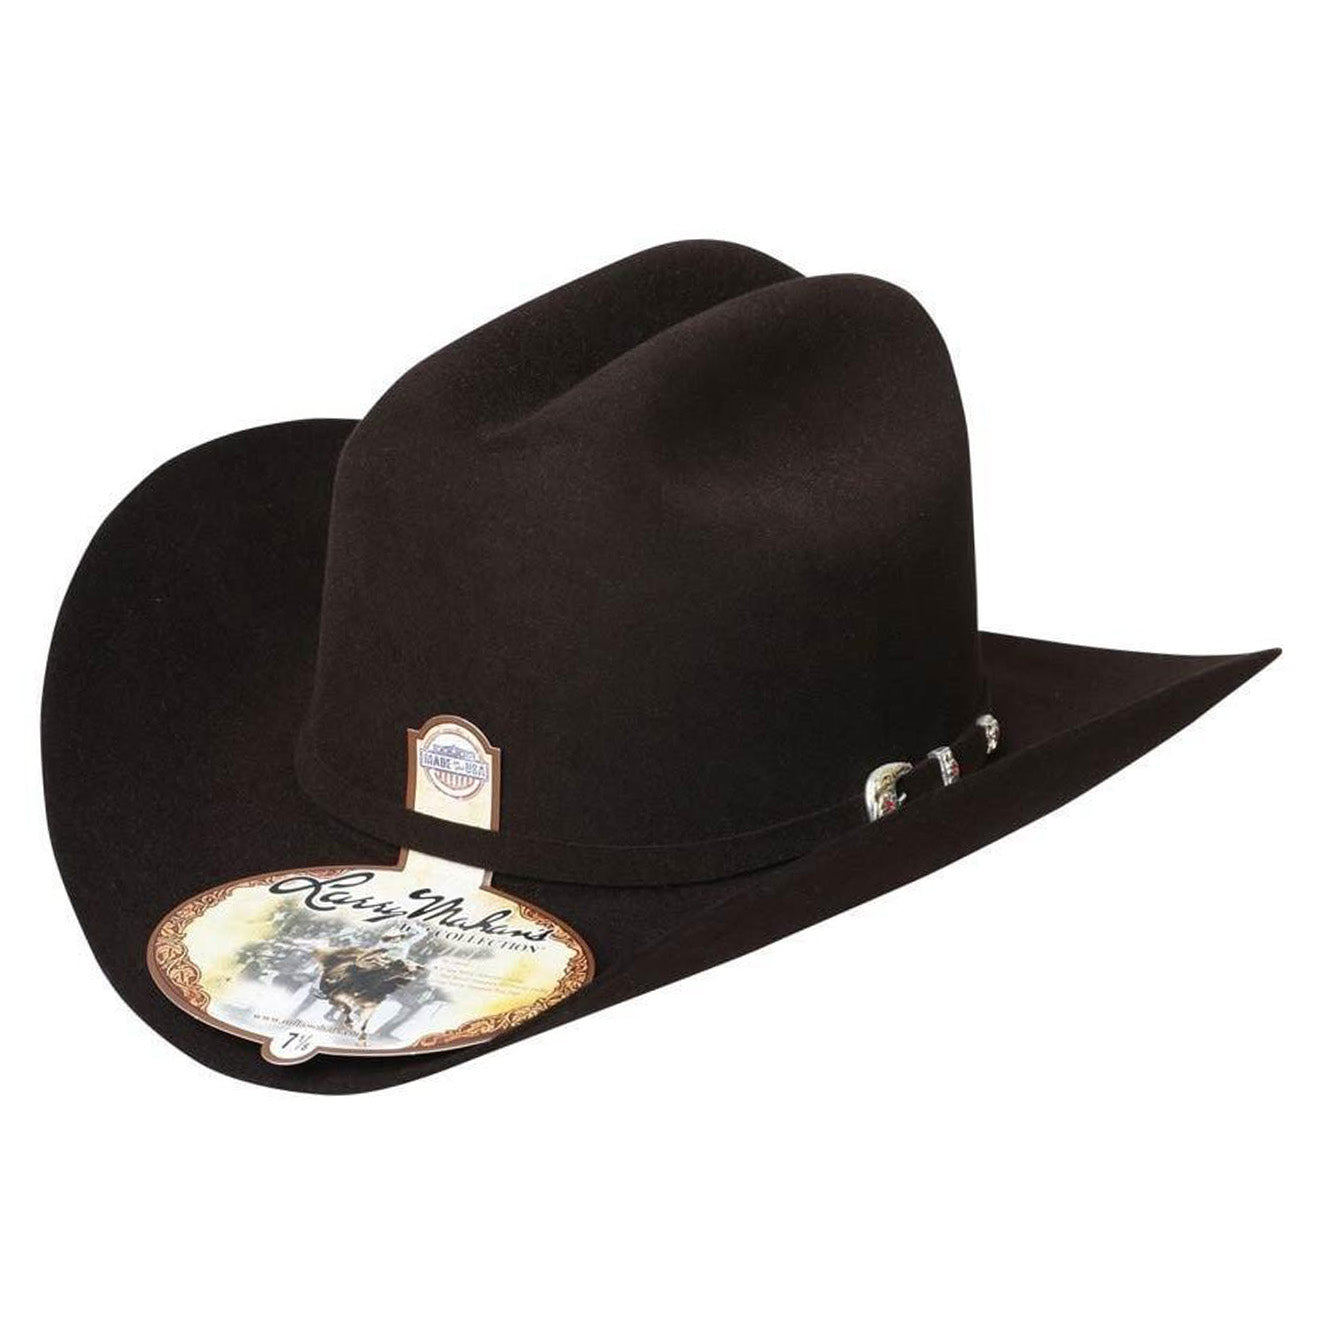 Larry Mahan 6x Real Brown Felt Hat